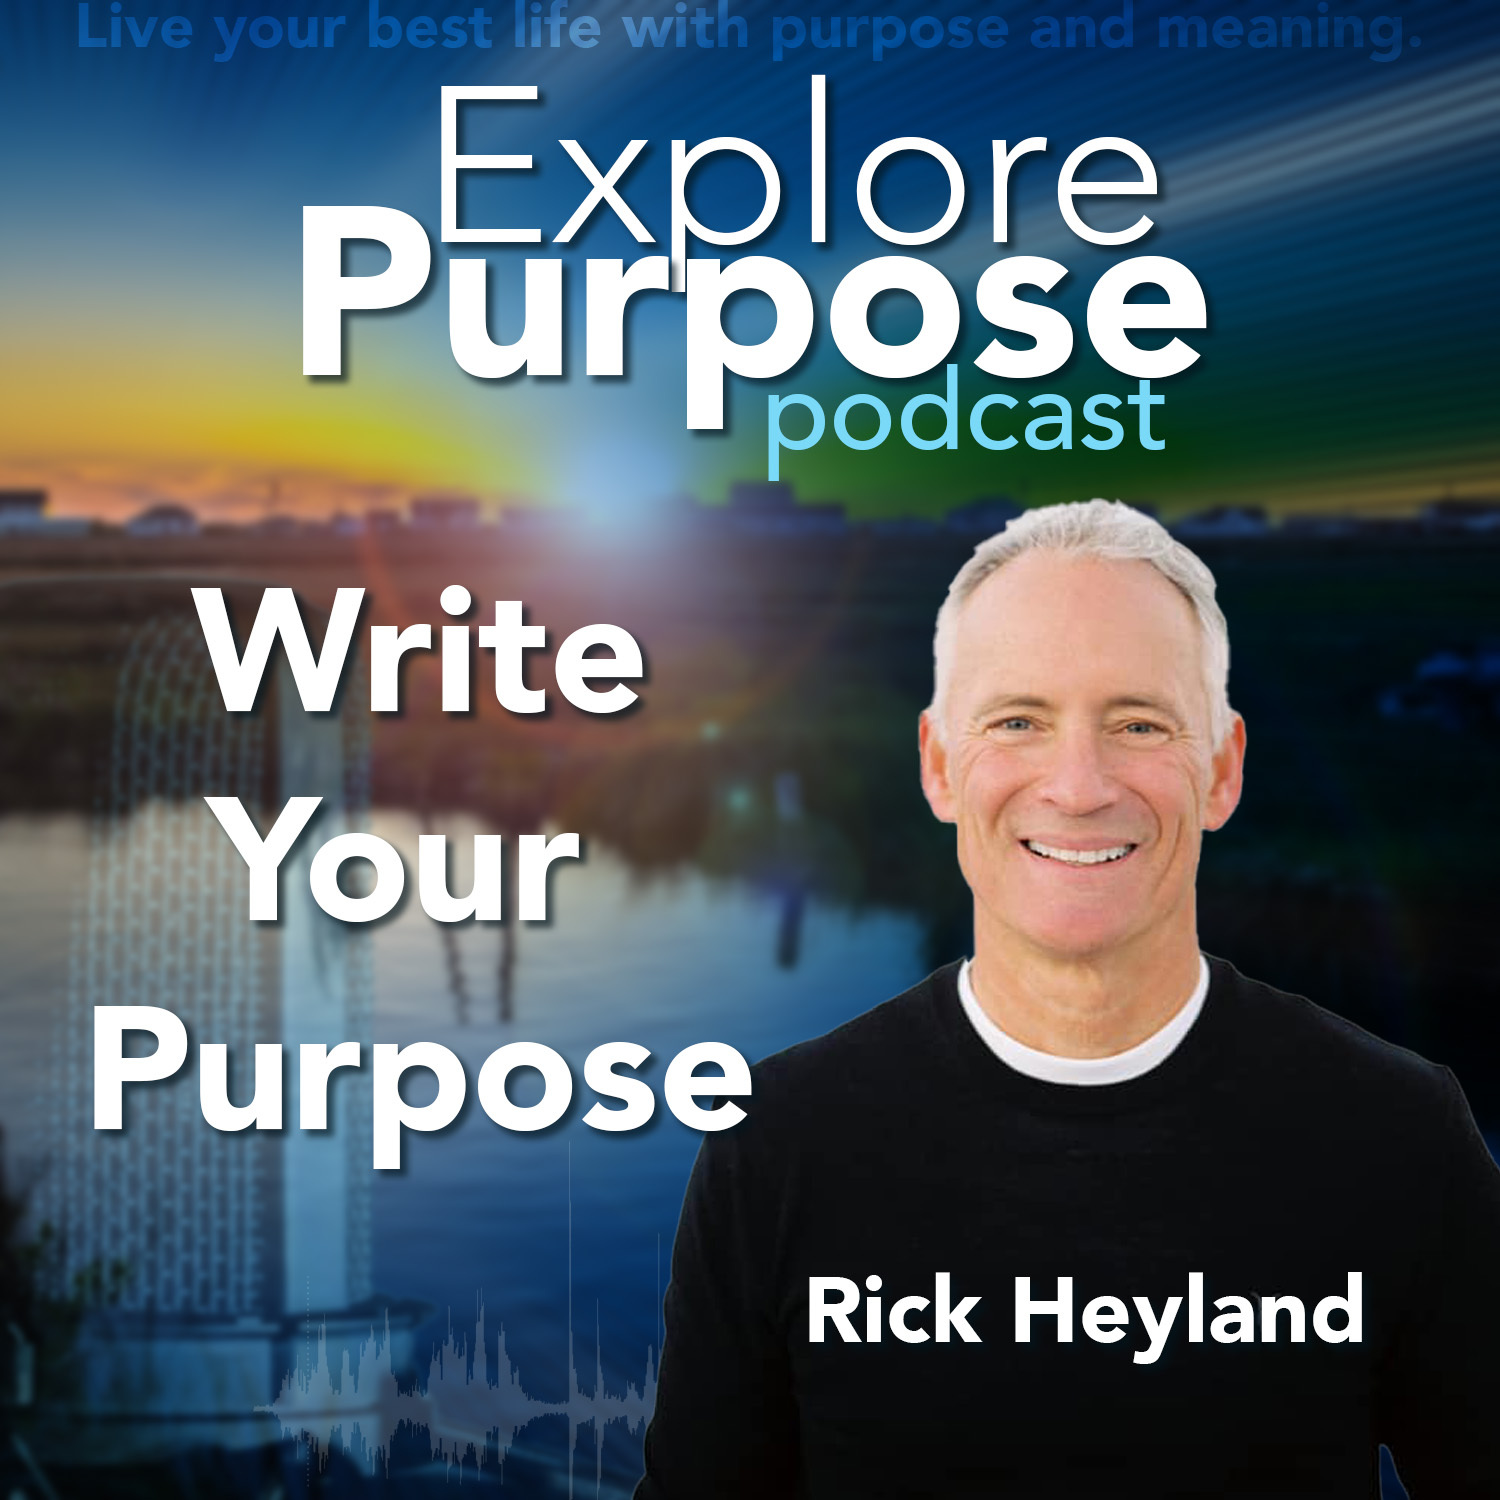 write_your_purpose-sqa0dzj.jpg